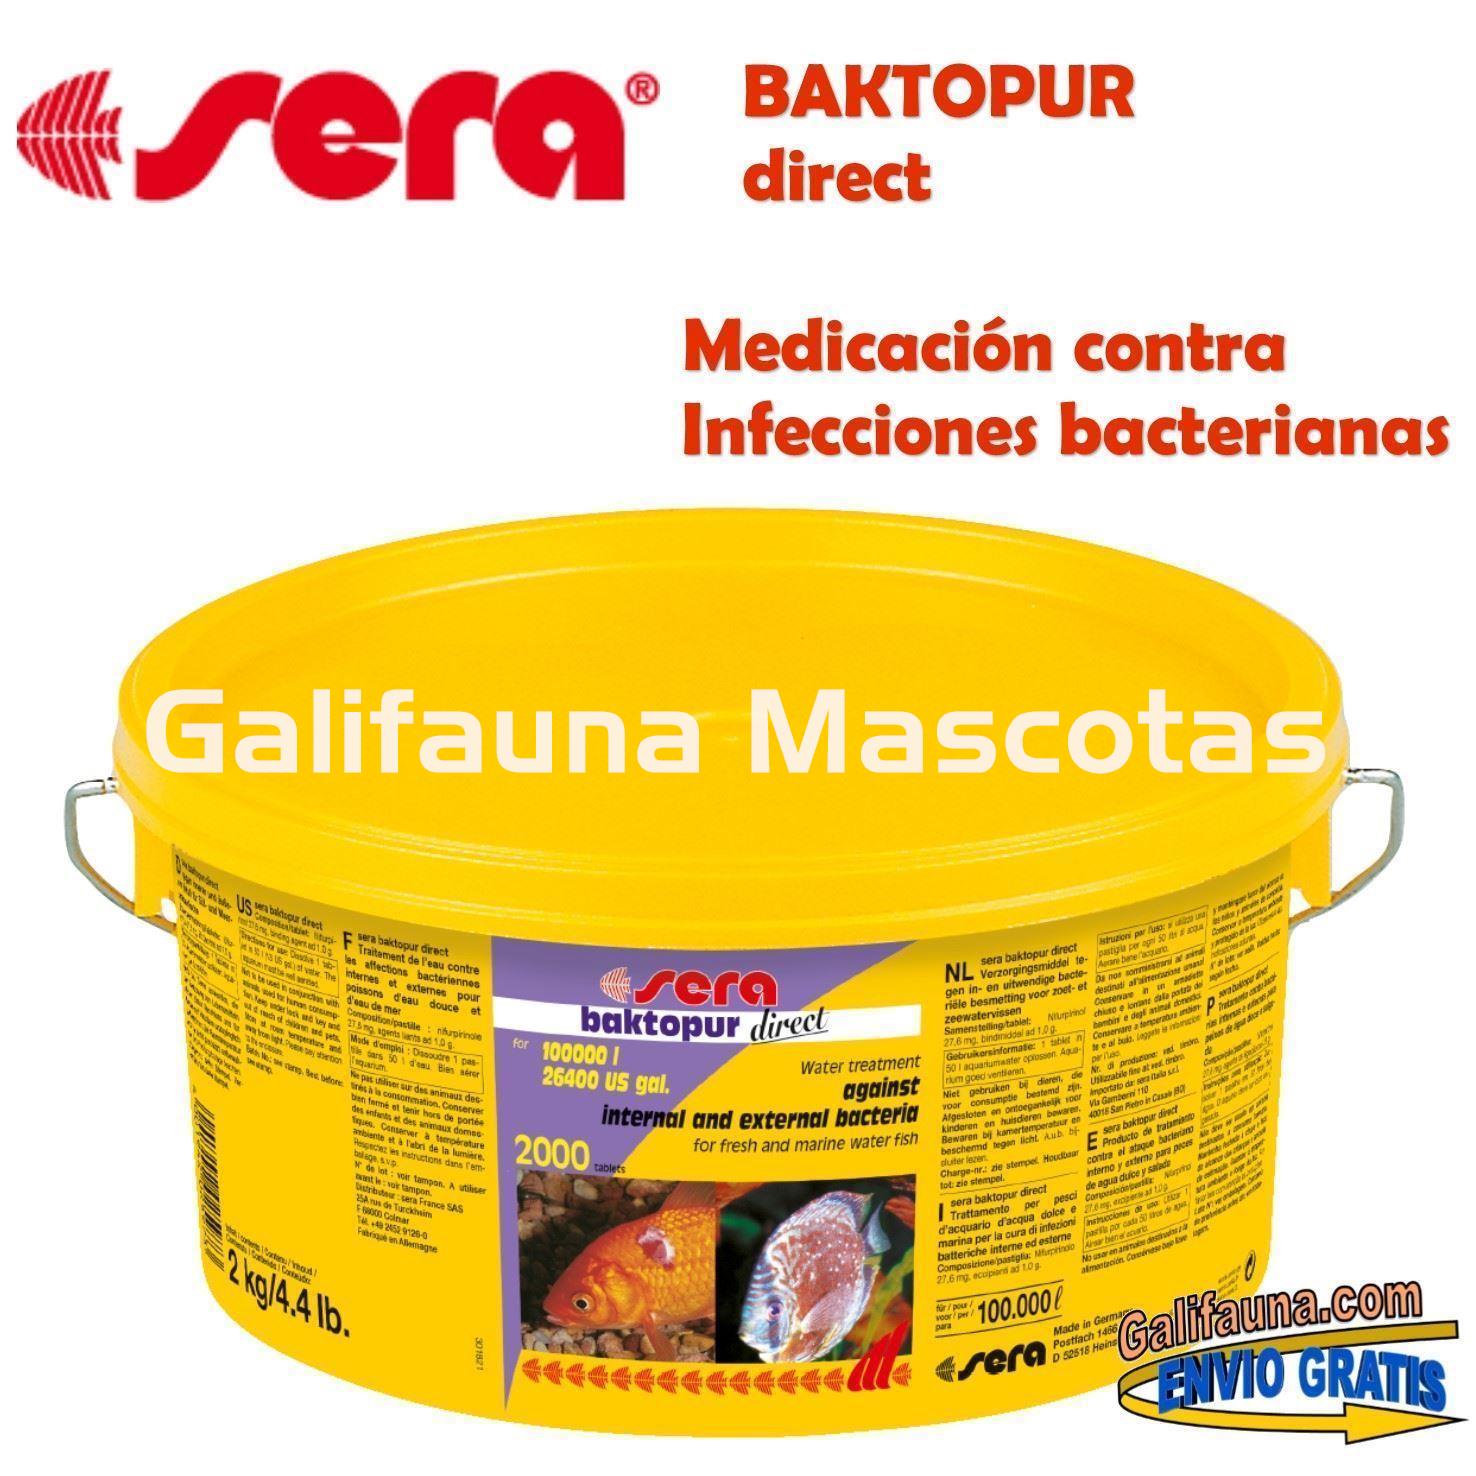 SERA Baktopur direct 2000 tabletas. Medicacion anti-bacteriana - Imagen 1